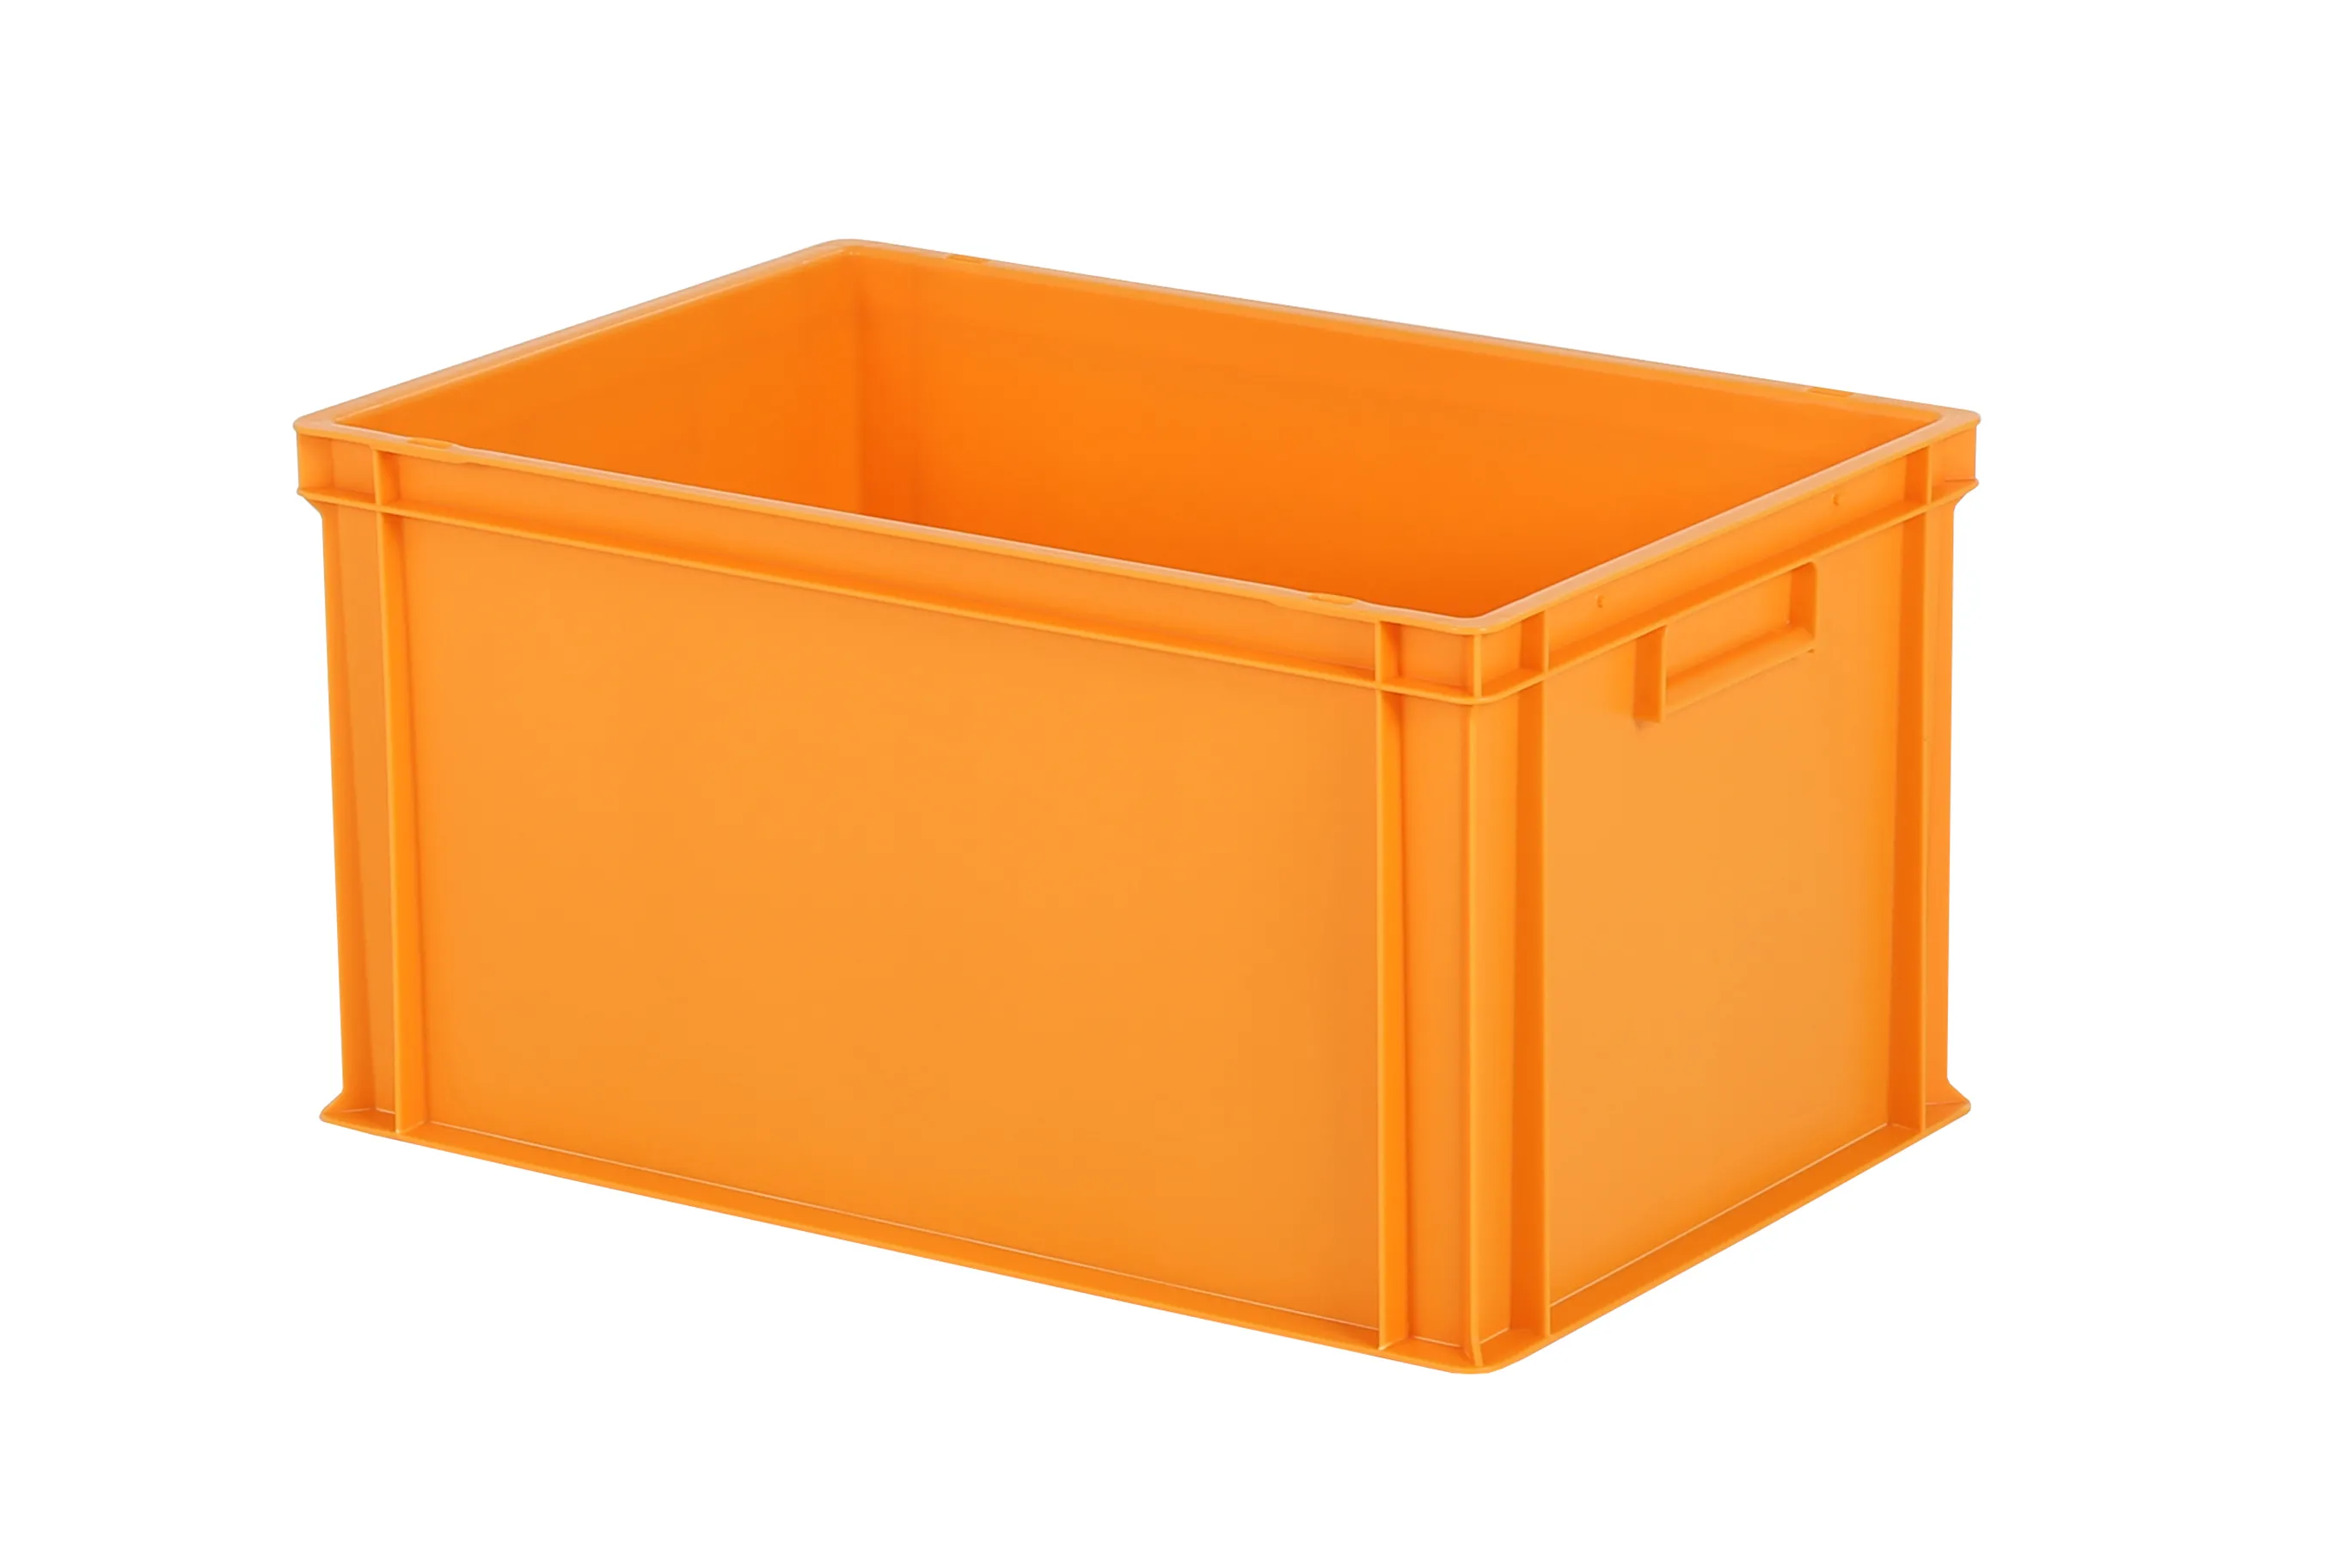 Stacking bin - 600 x 400 x H 320 mm - orange (reinforced base)